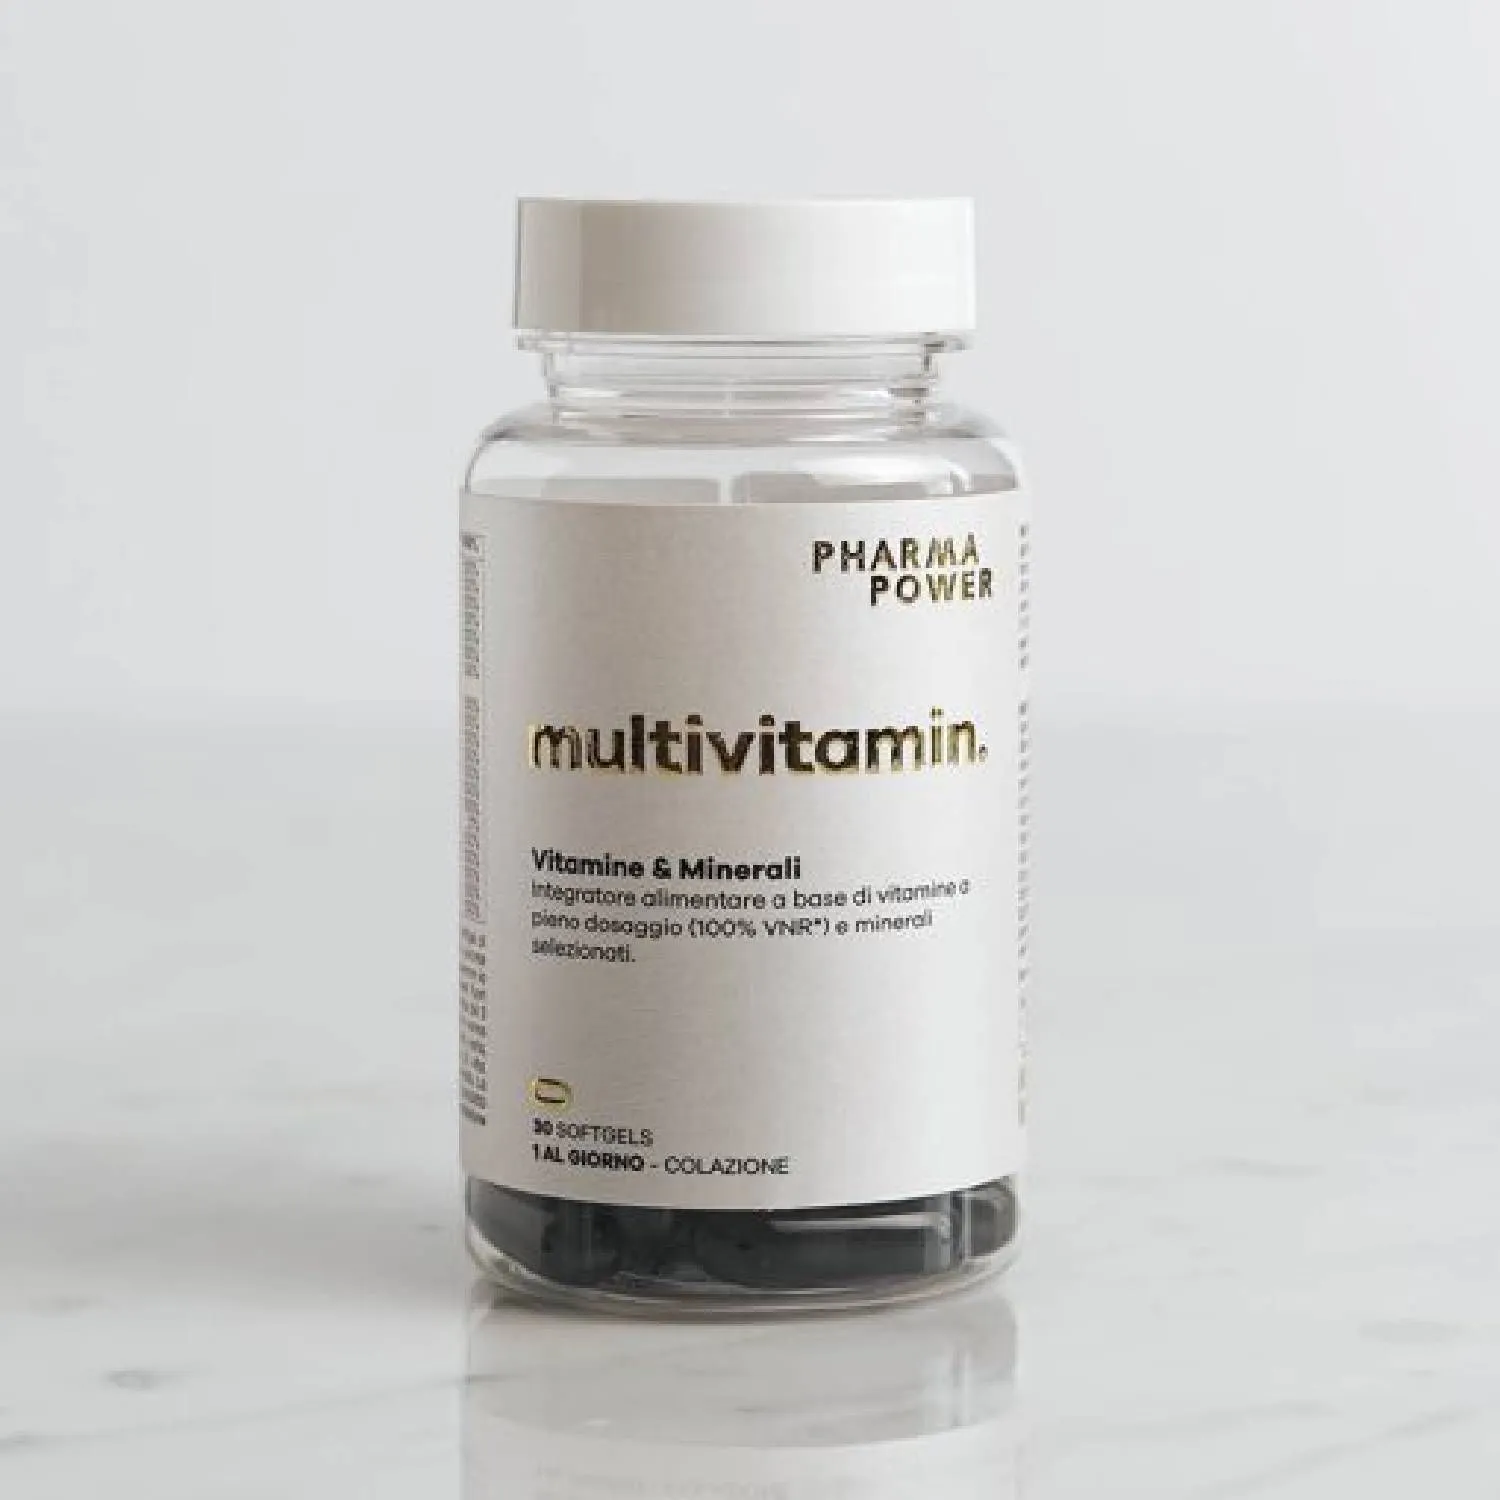 Pharmapower Multivitamin Integratore Vitamine E Minerali 30 Softgels